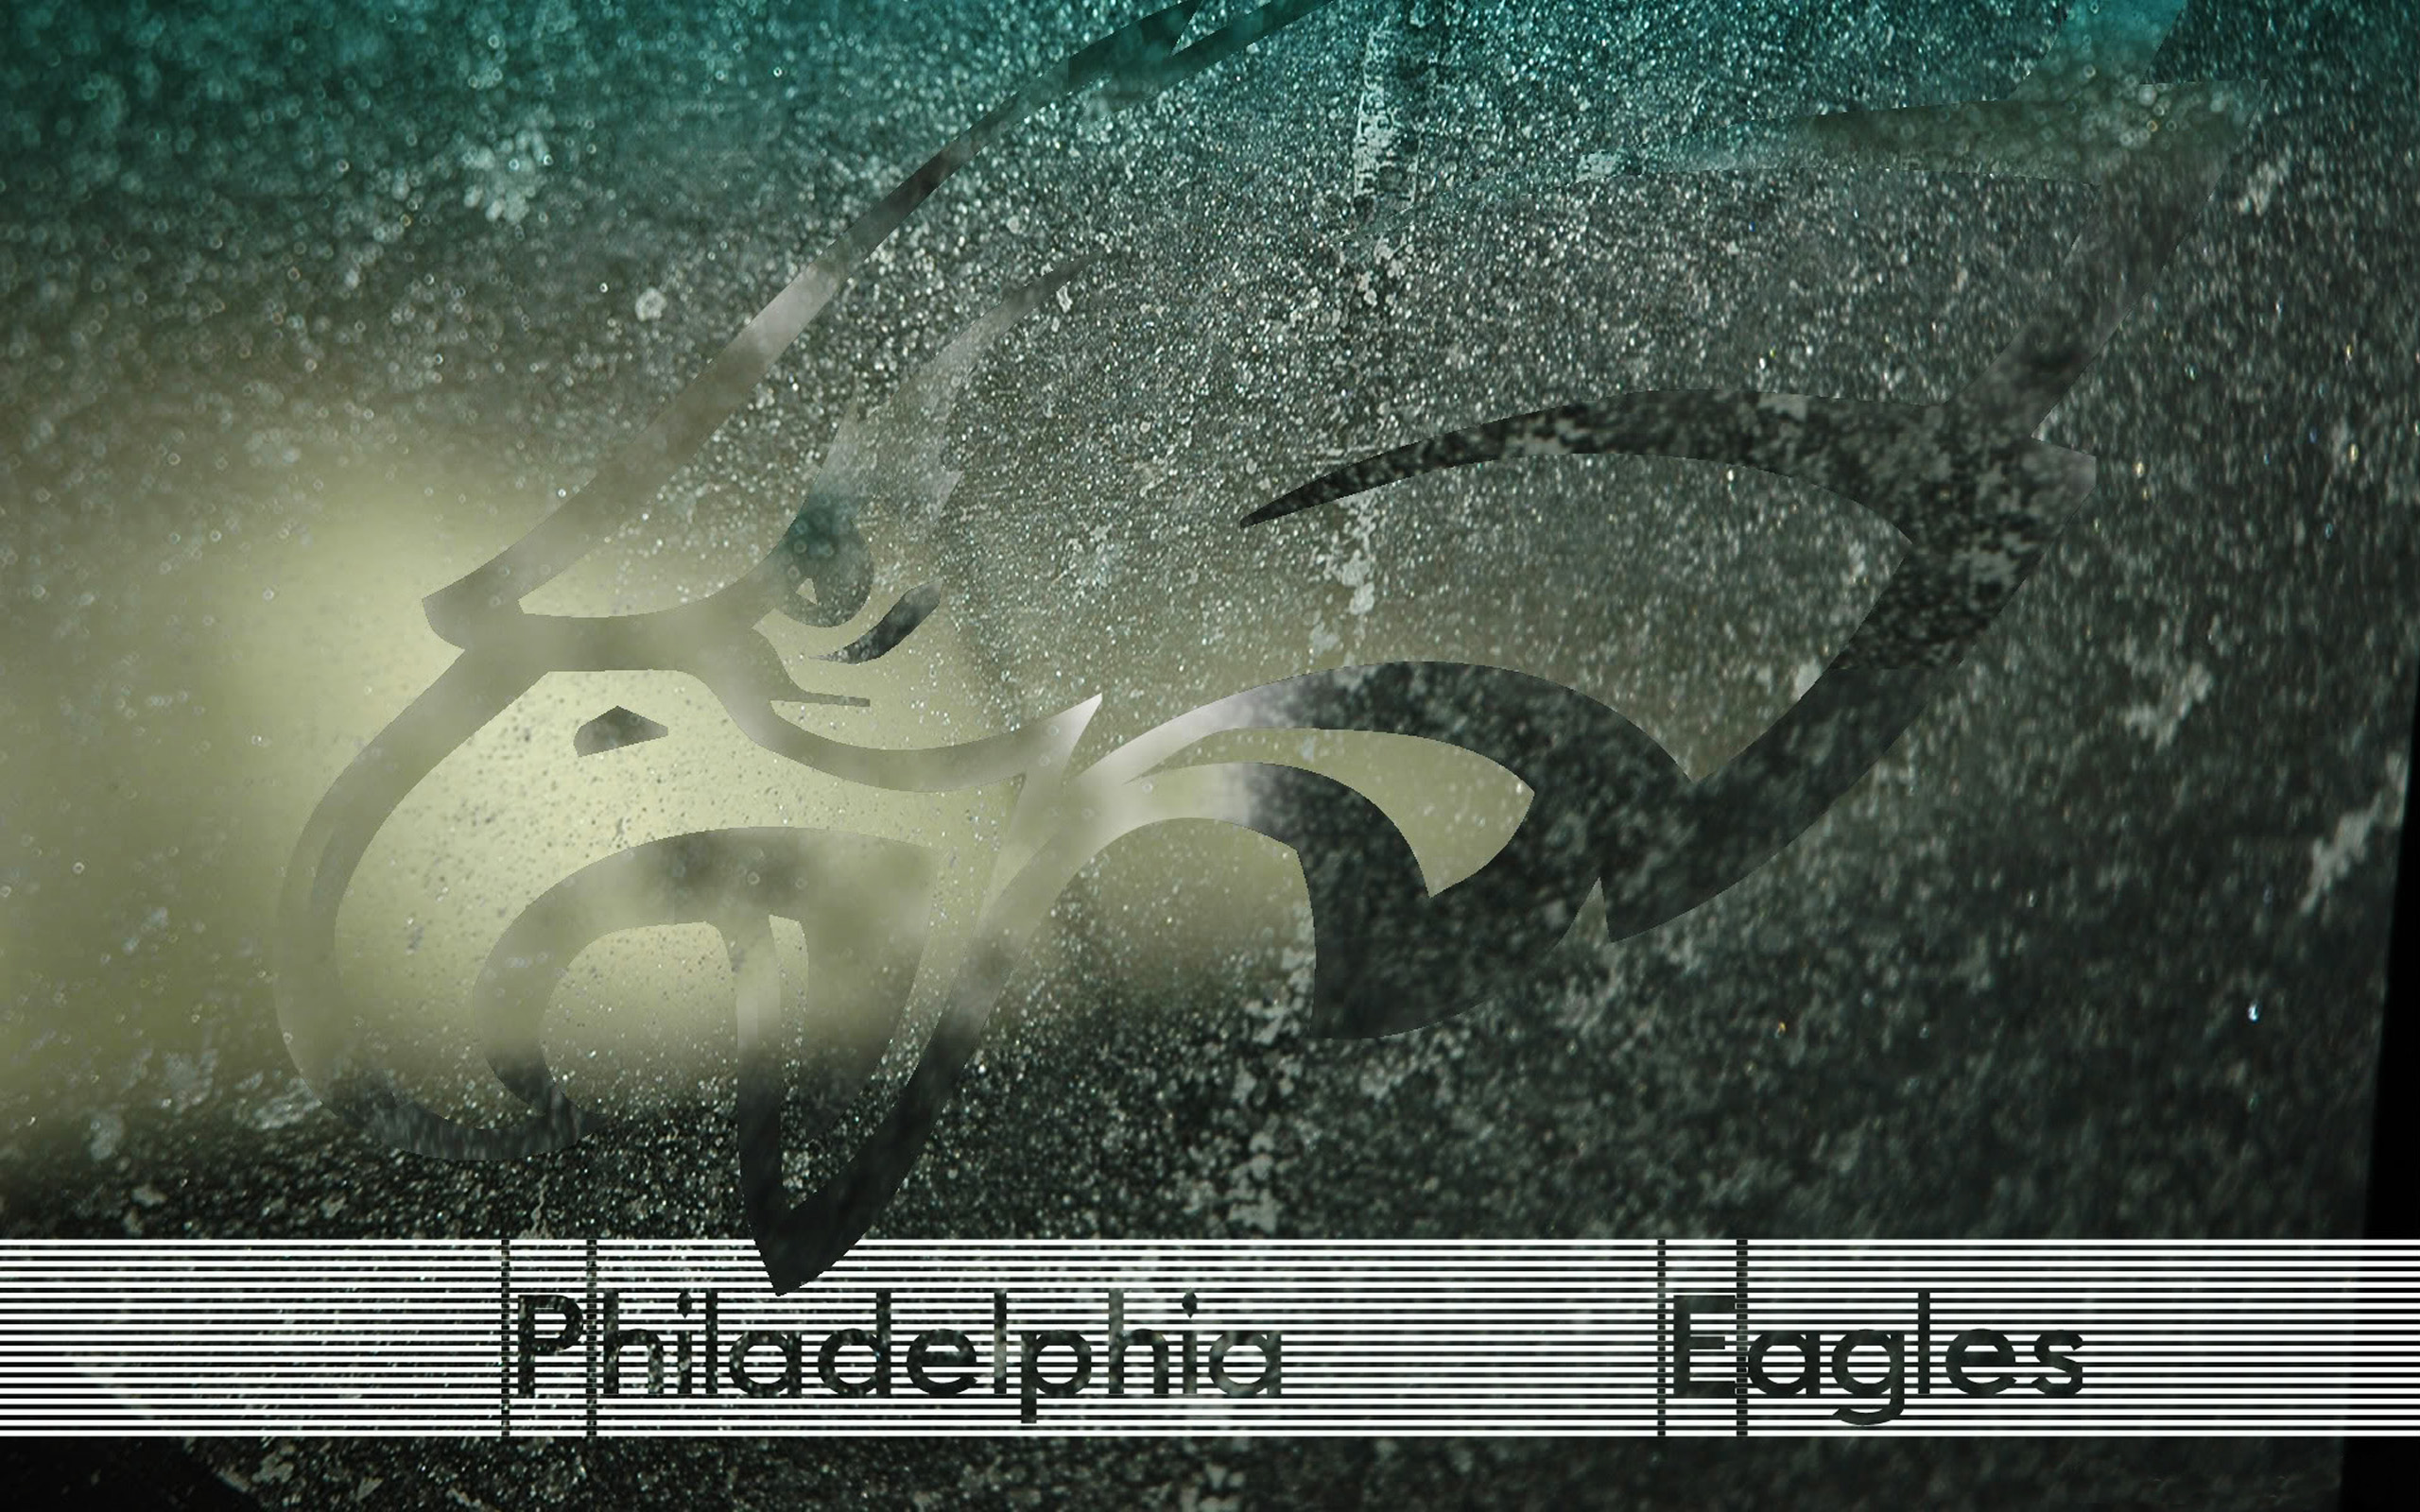 Philadelphia Eagles HD Wallpaper Pictures